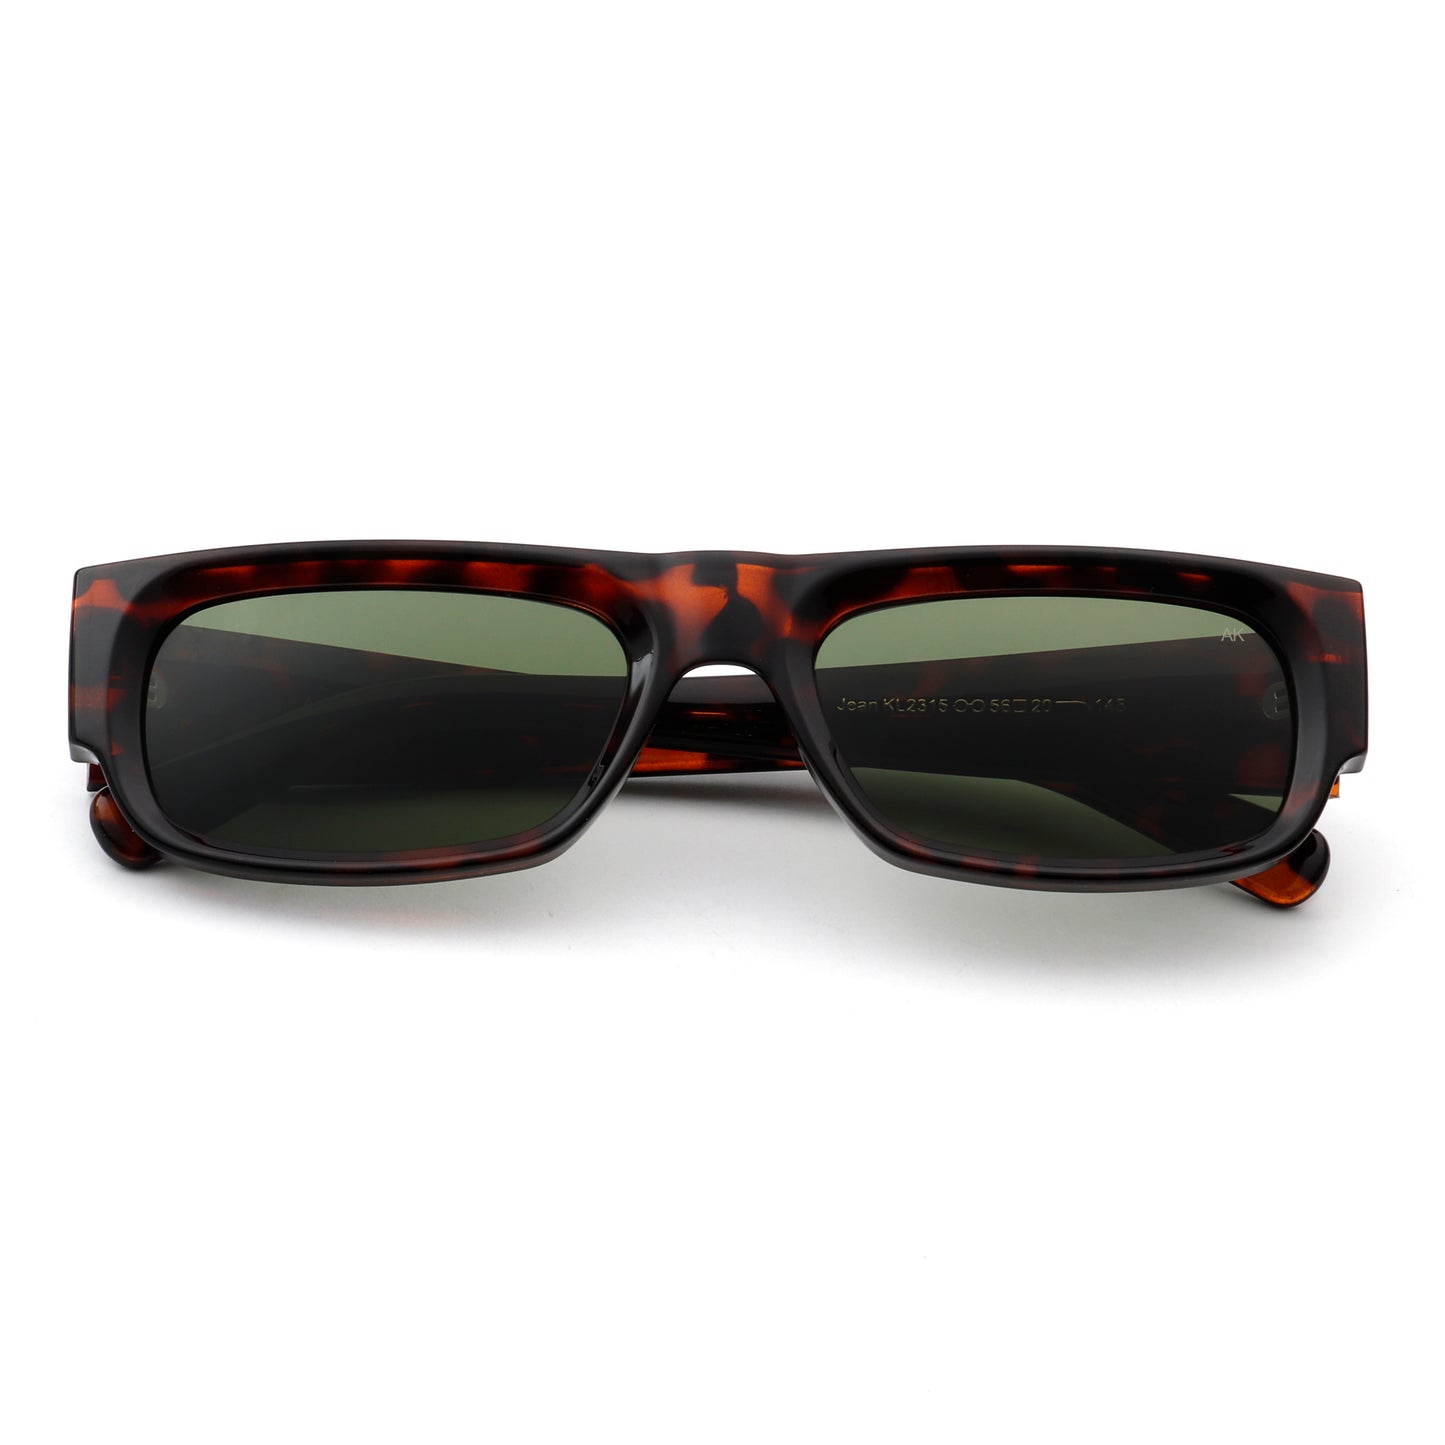 A.Kjaerbede Jean Sunglasses in Demi Tortoise color